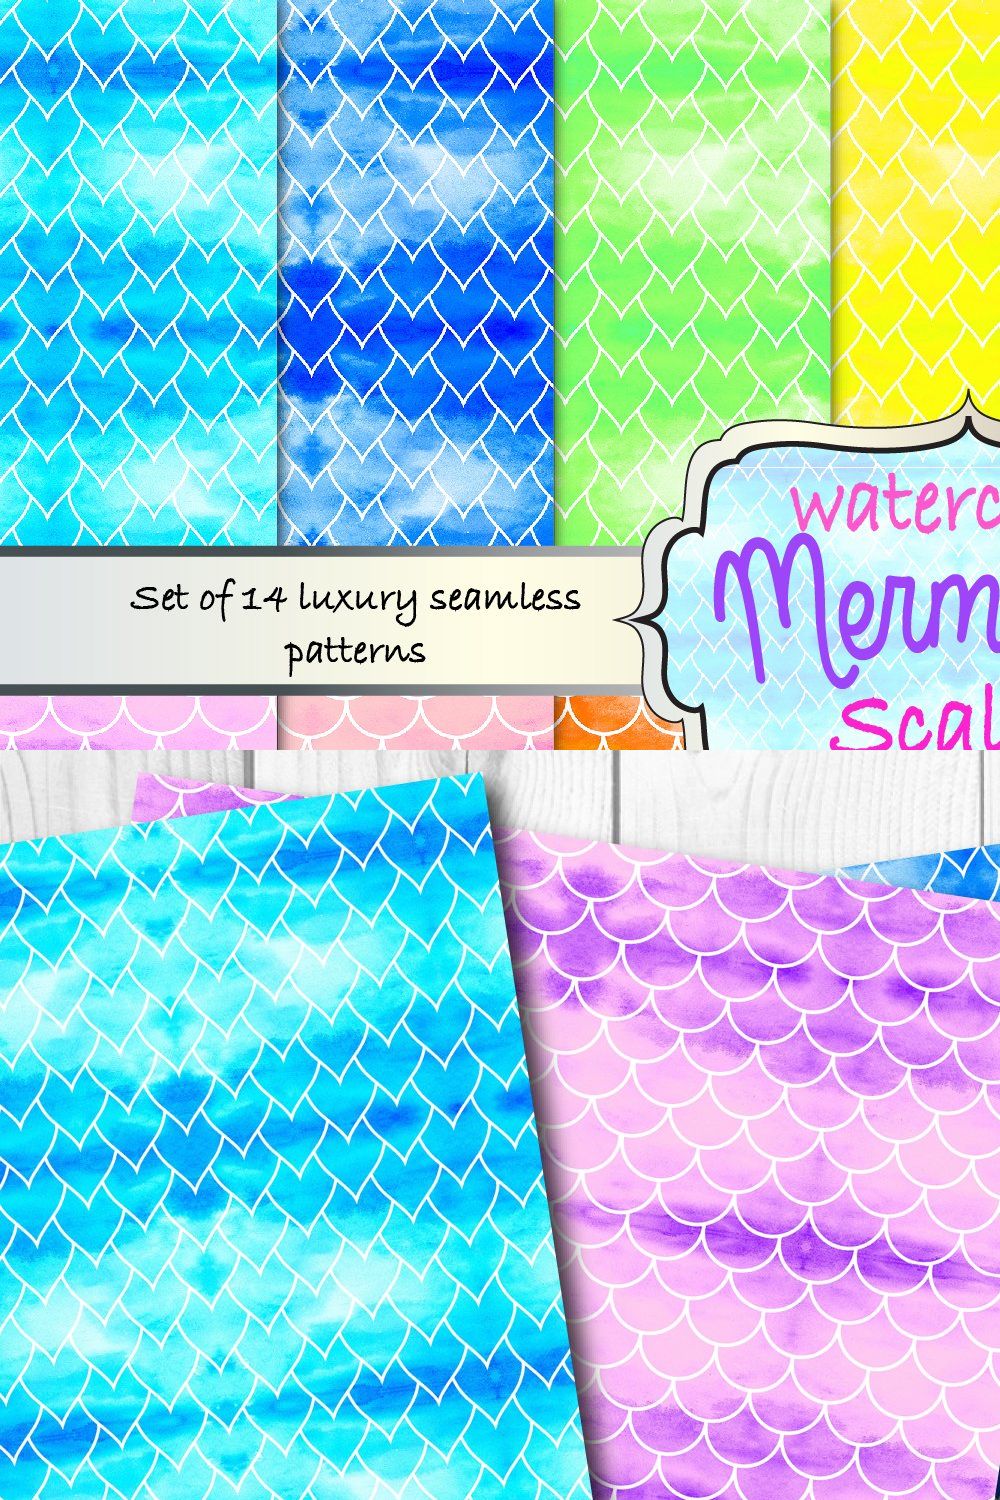 Mermaid scales rainbow pattern pack pinterest preview image.